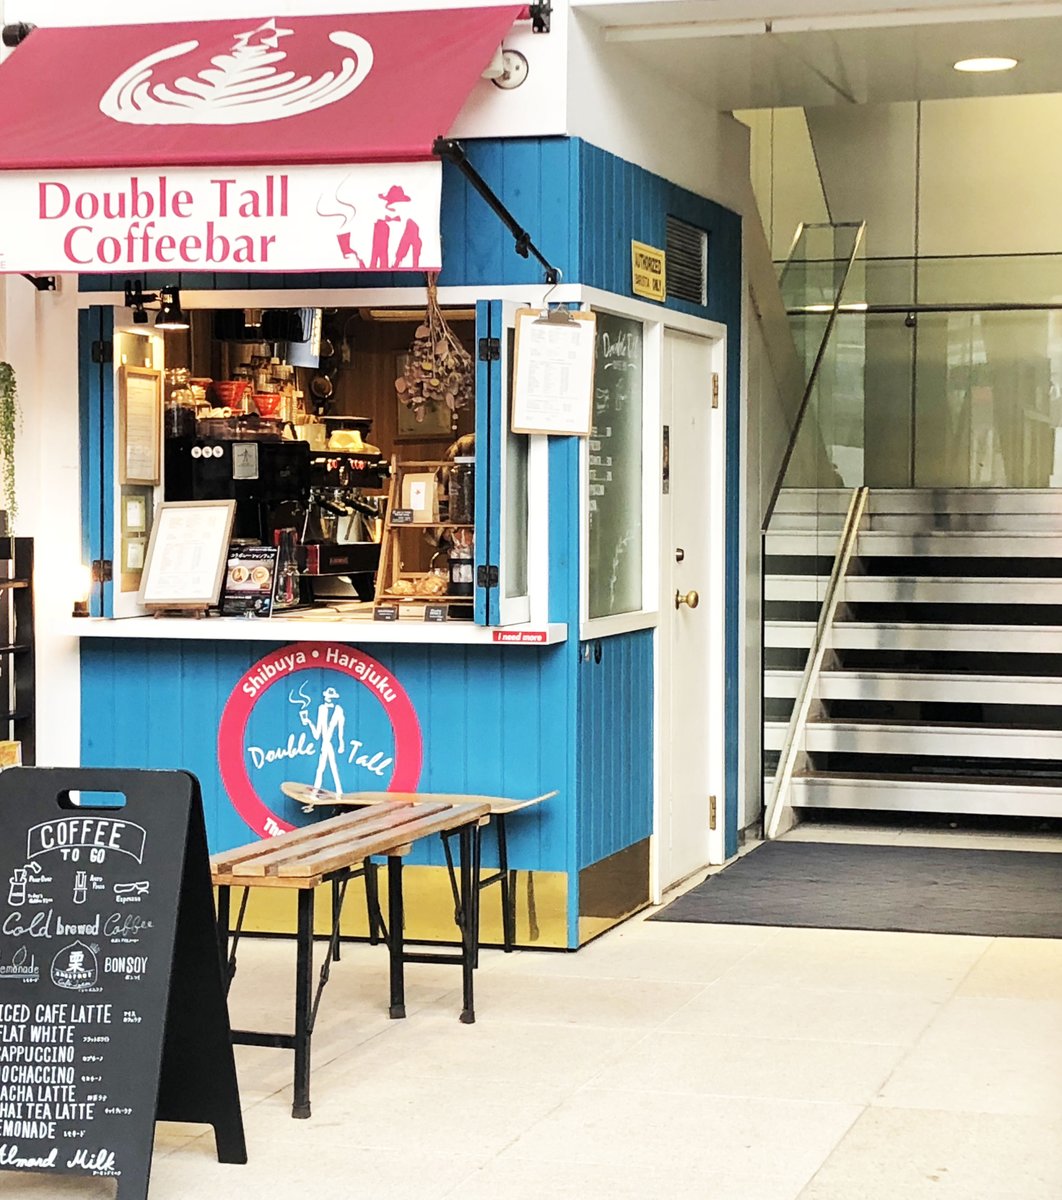 Double Tall Coffee Bar ダブルトールコーヒーバー 渋谷cocoti店の店舗情報 味 雰囲気 アクセス等 Playlife プレイライフ